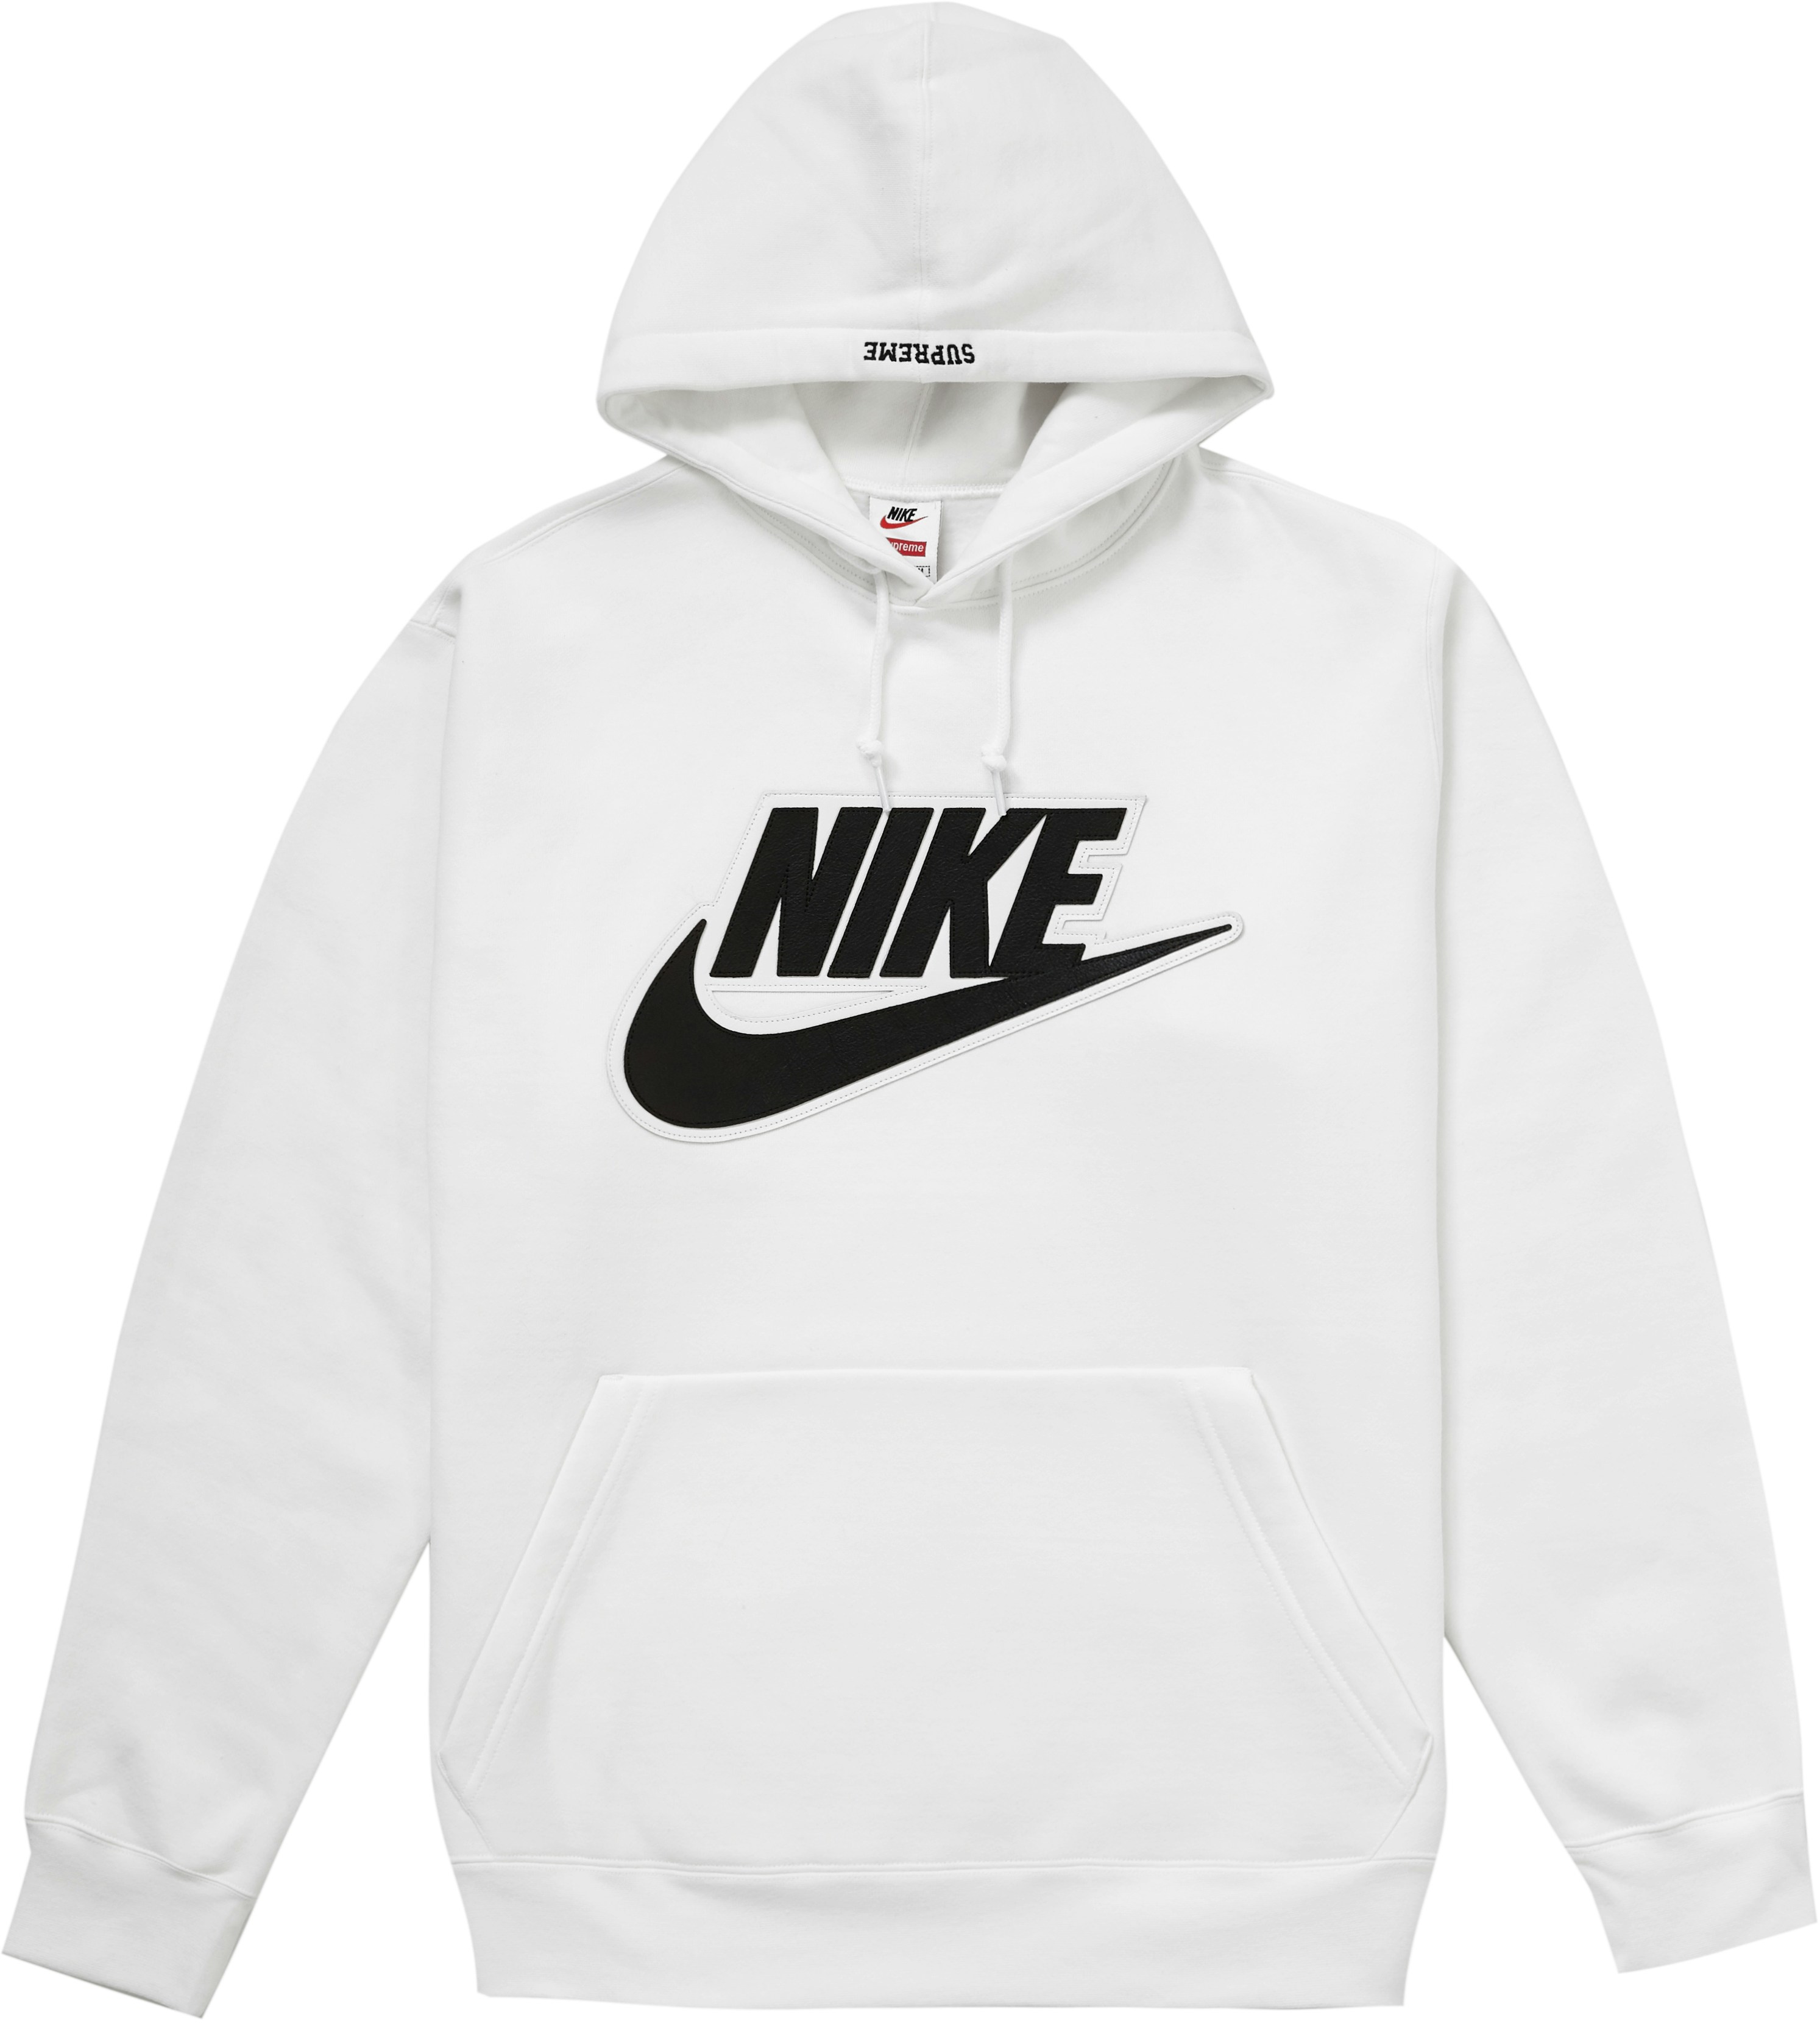 Supreme x Nike Leather Applique Hooded Sweatshirt White - Novelship